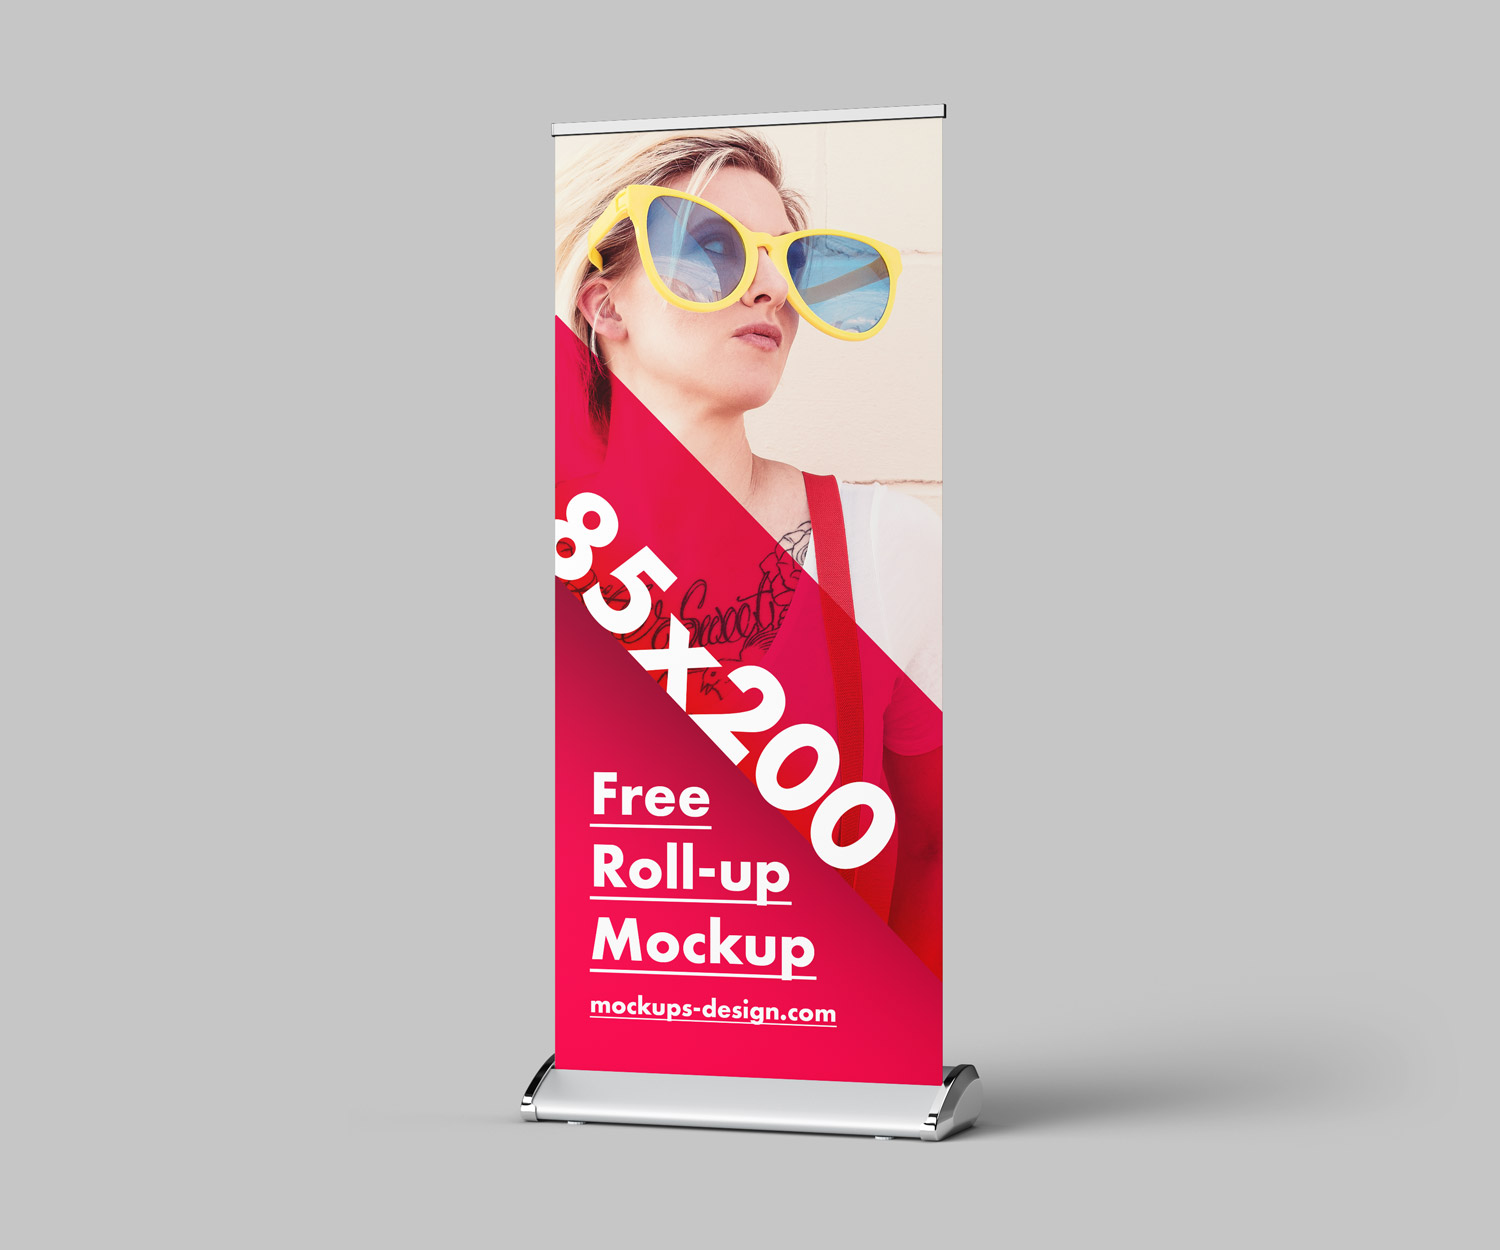 Download Free Roll-up Mockup / 85×200 cm | Free Mockup